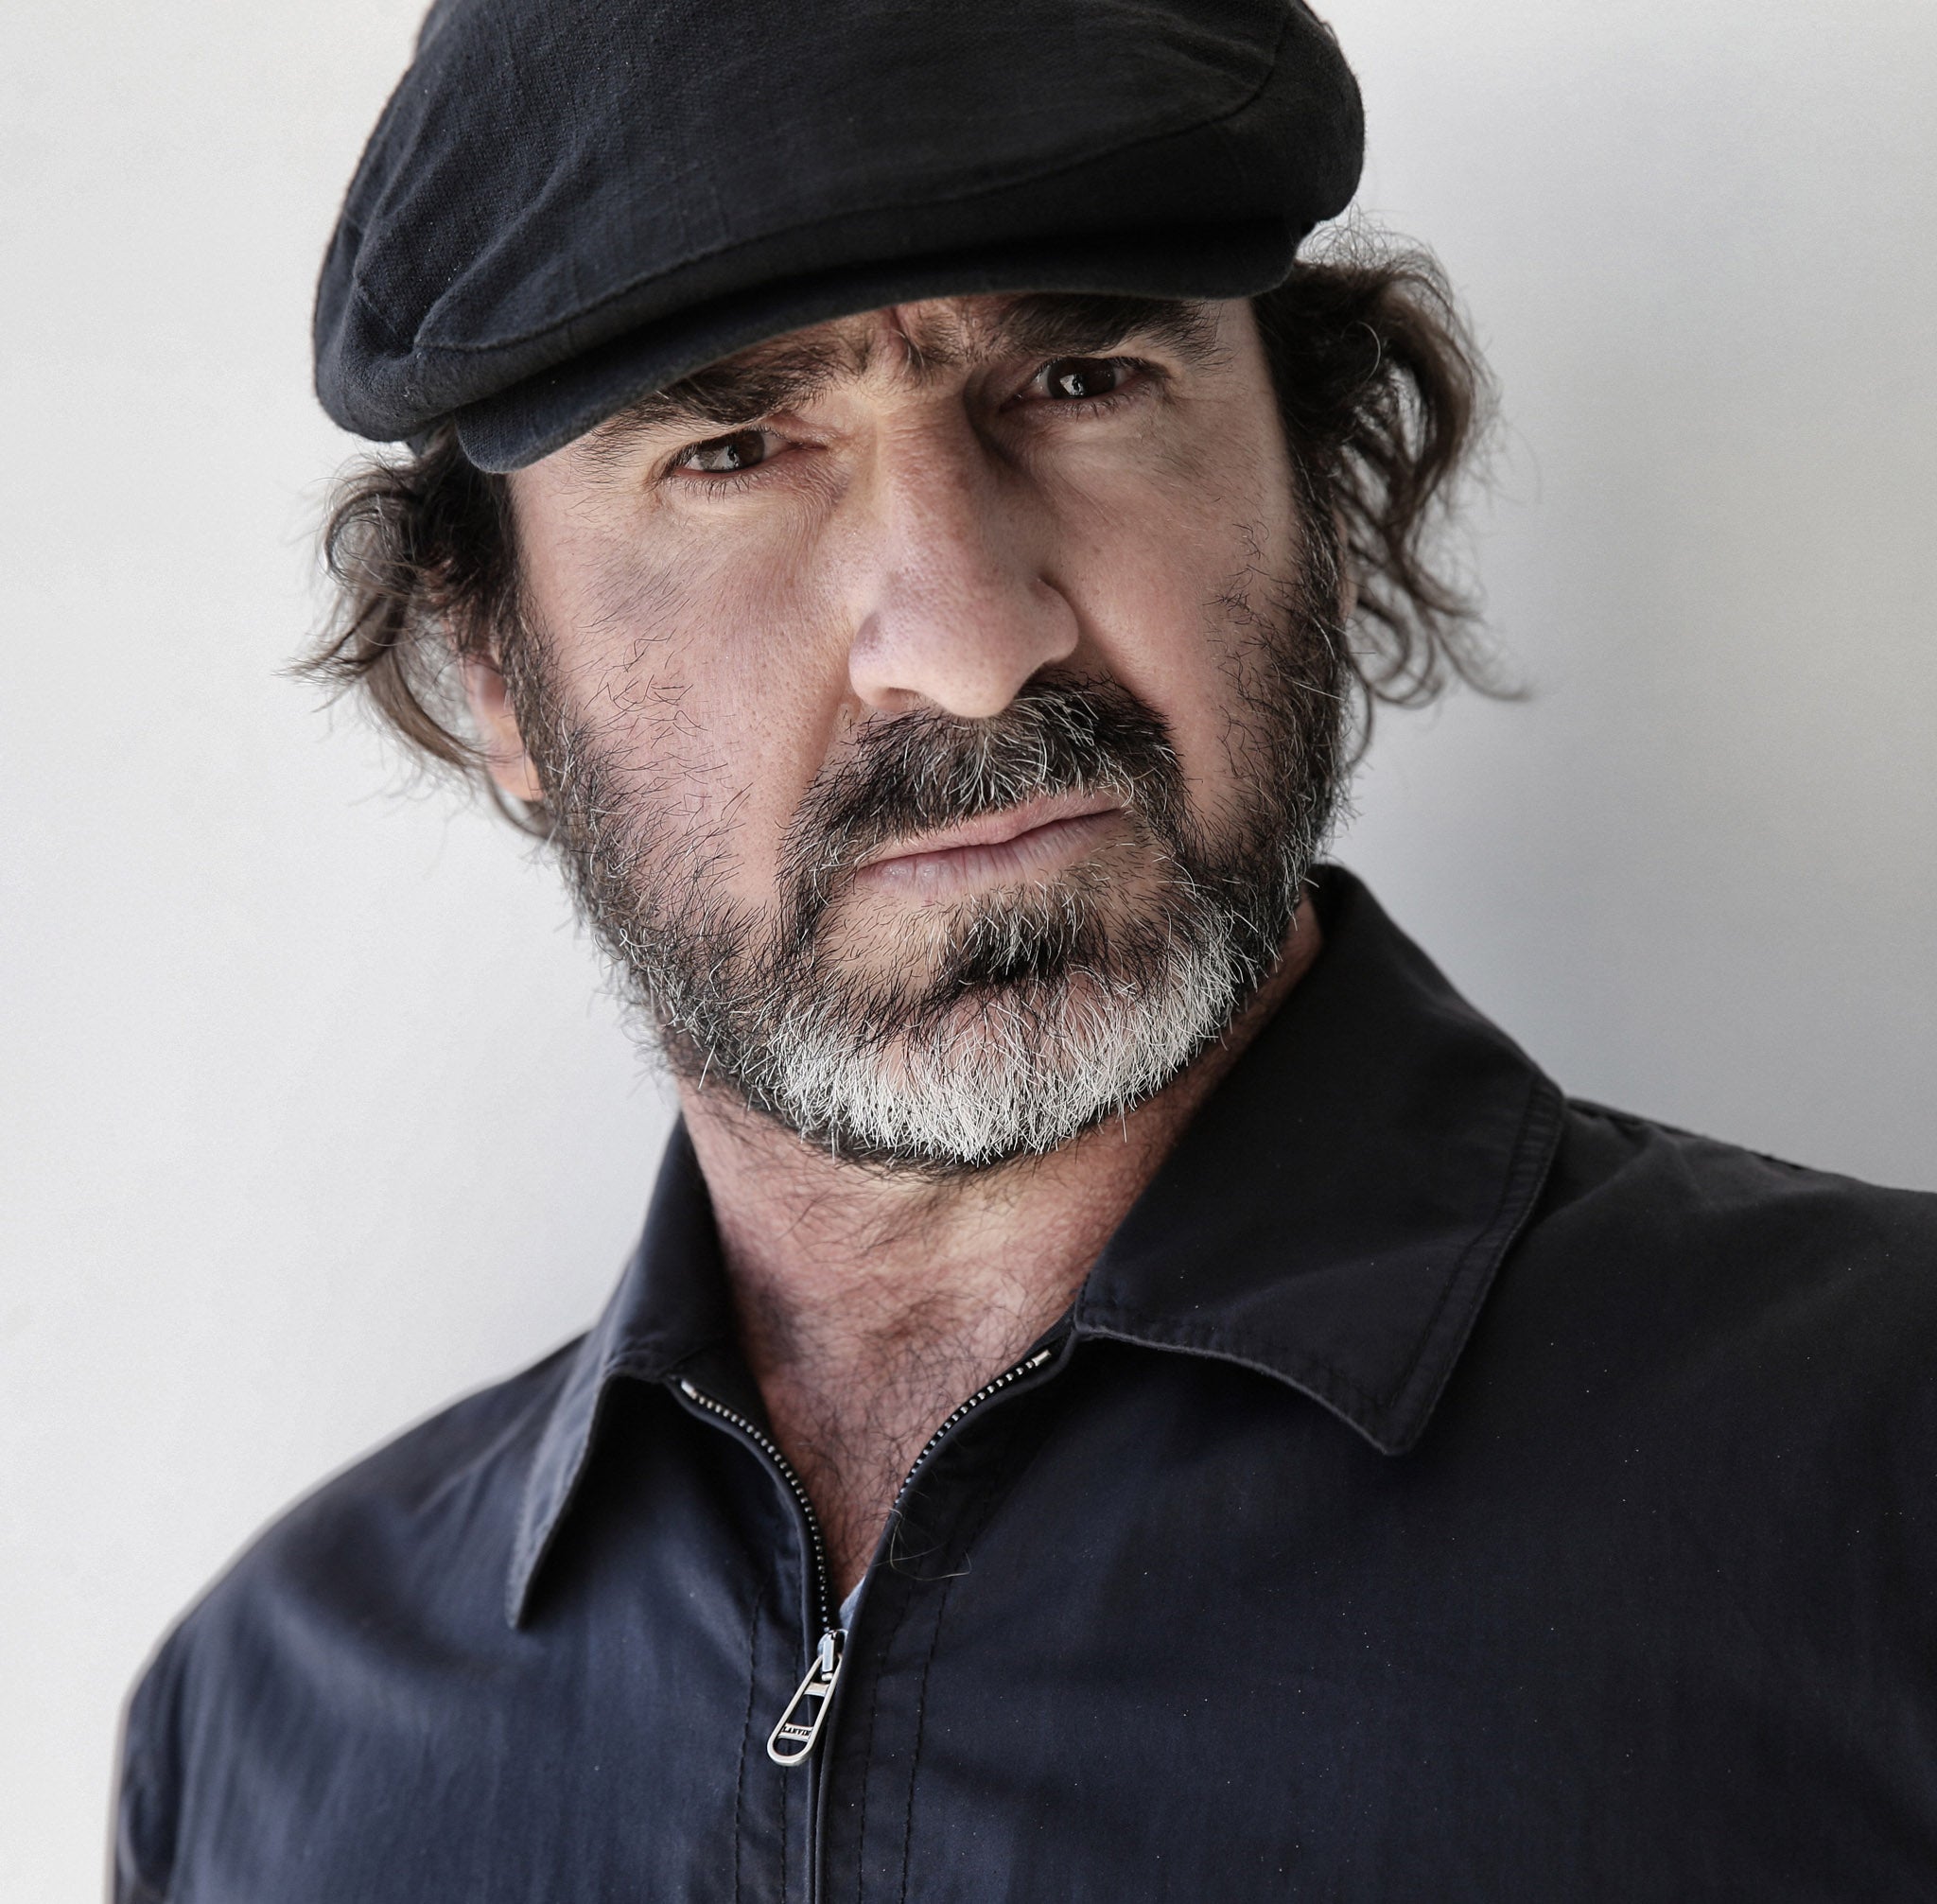 Eric Cantona posing at the Cannes Film Festival 2013